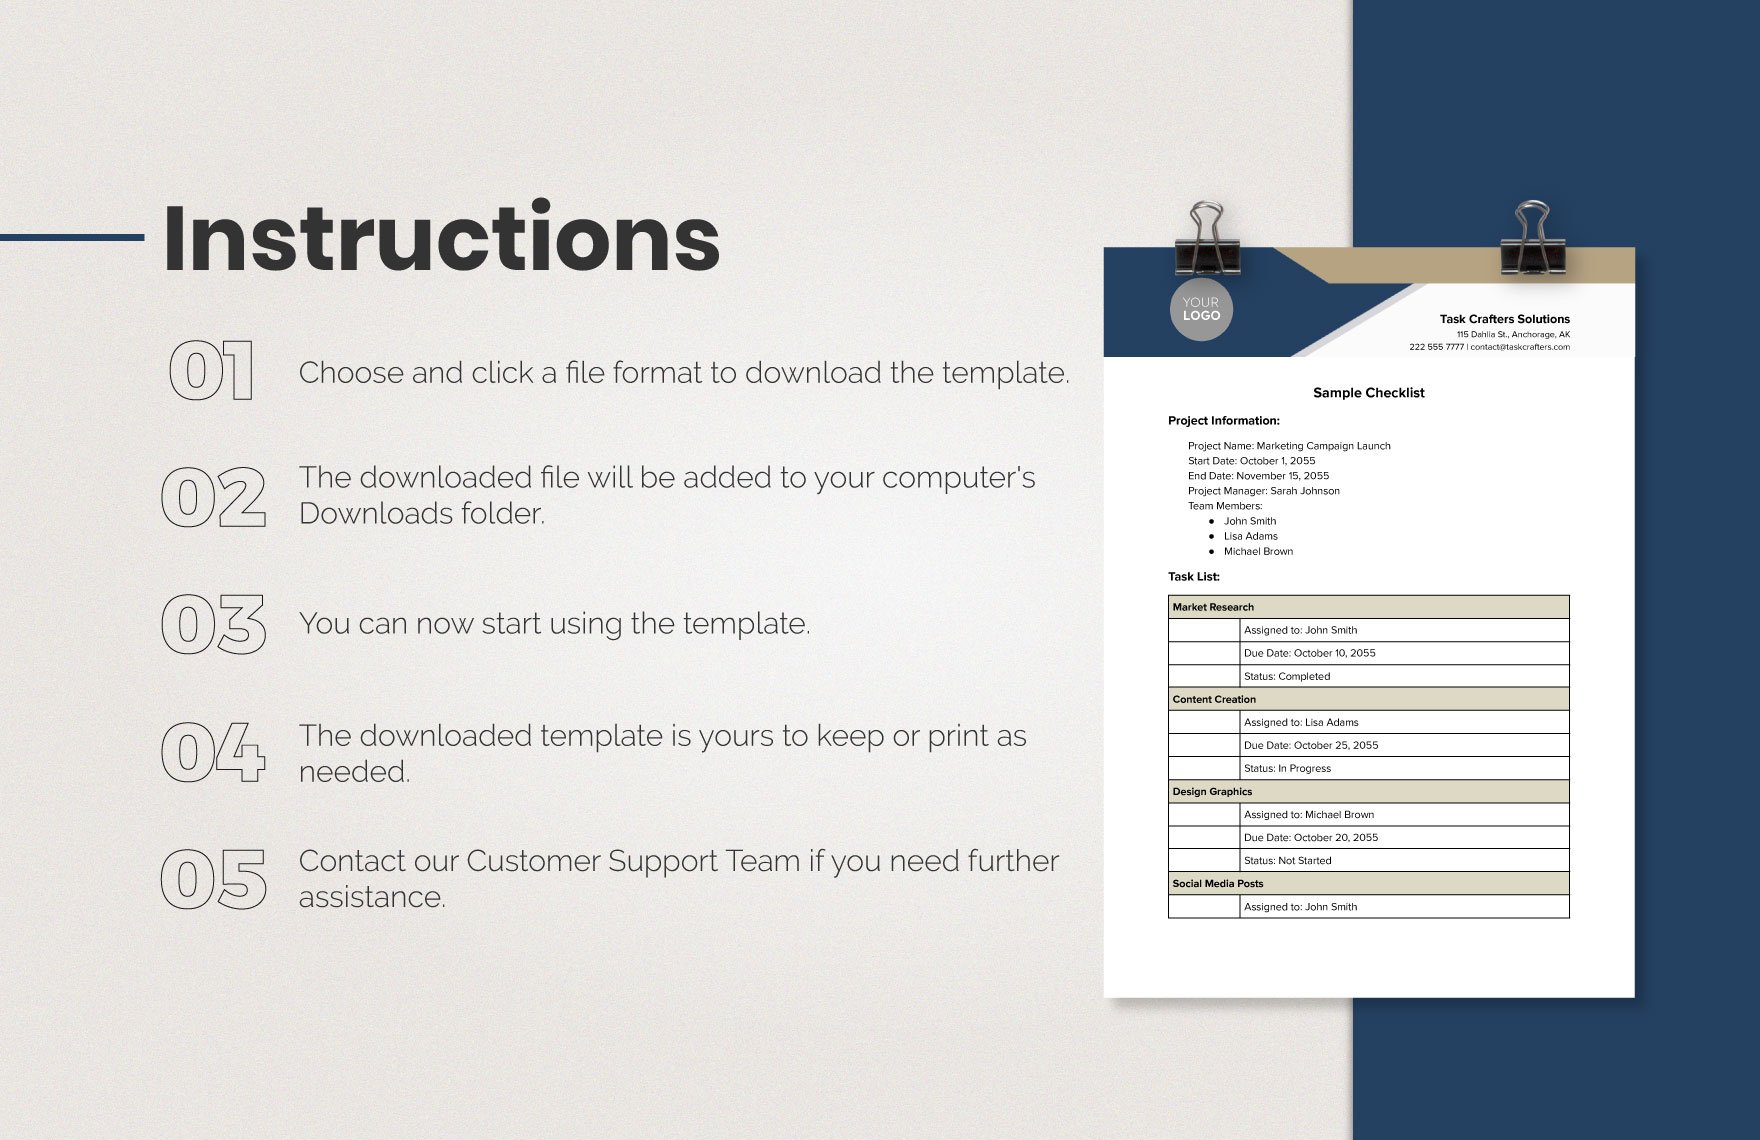 Sample Checklist Template